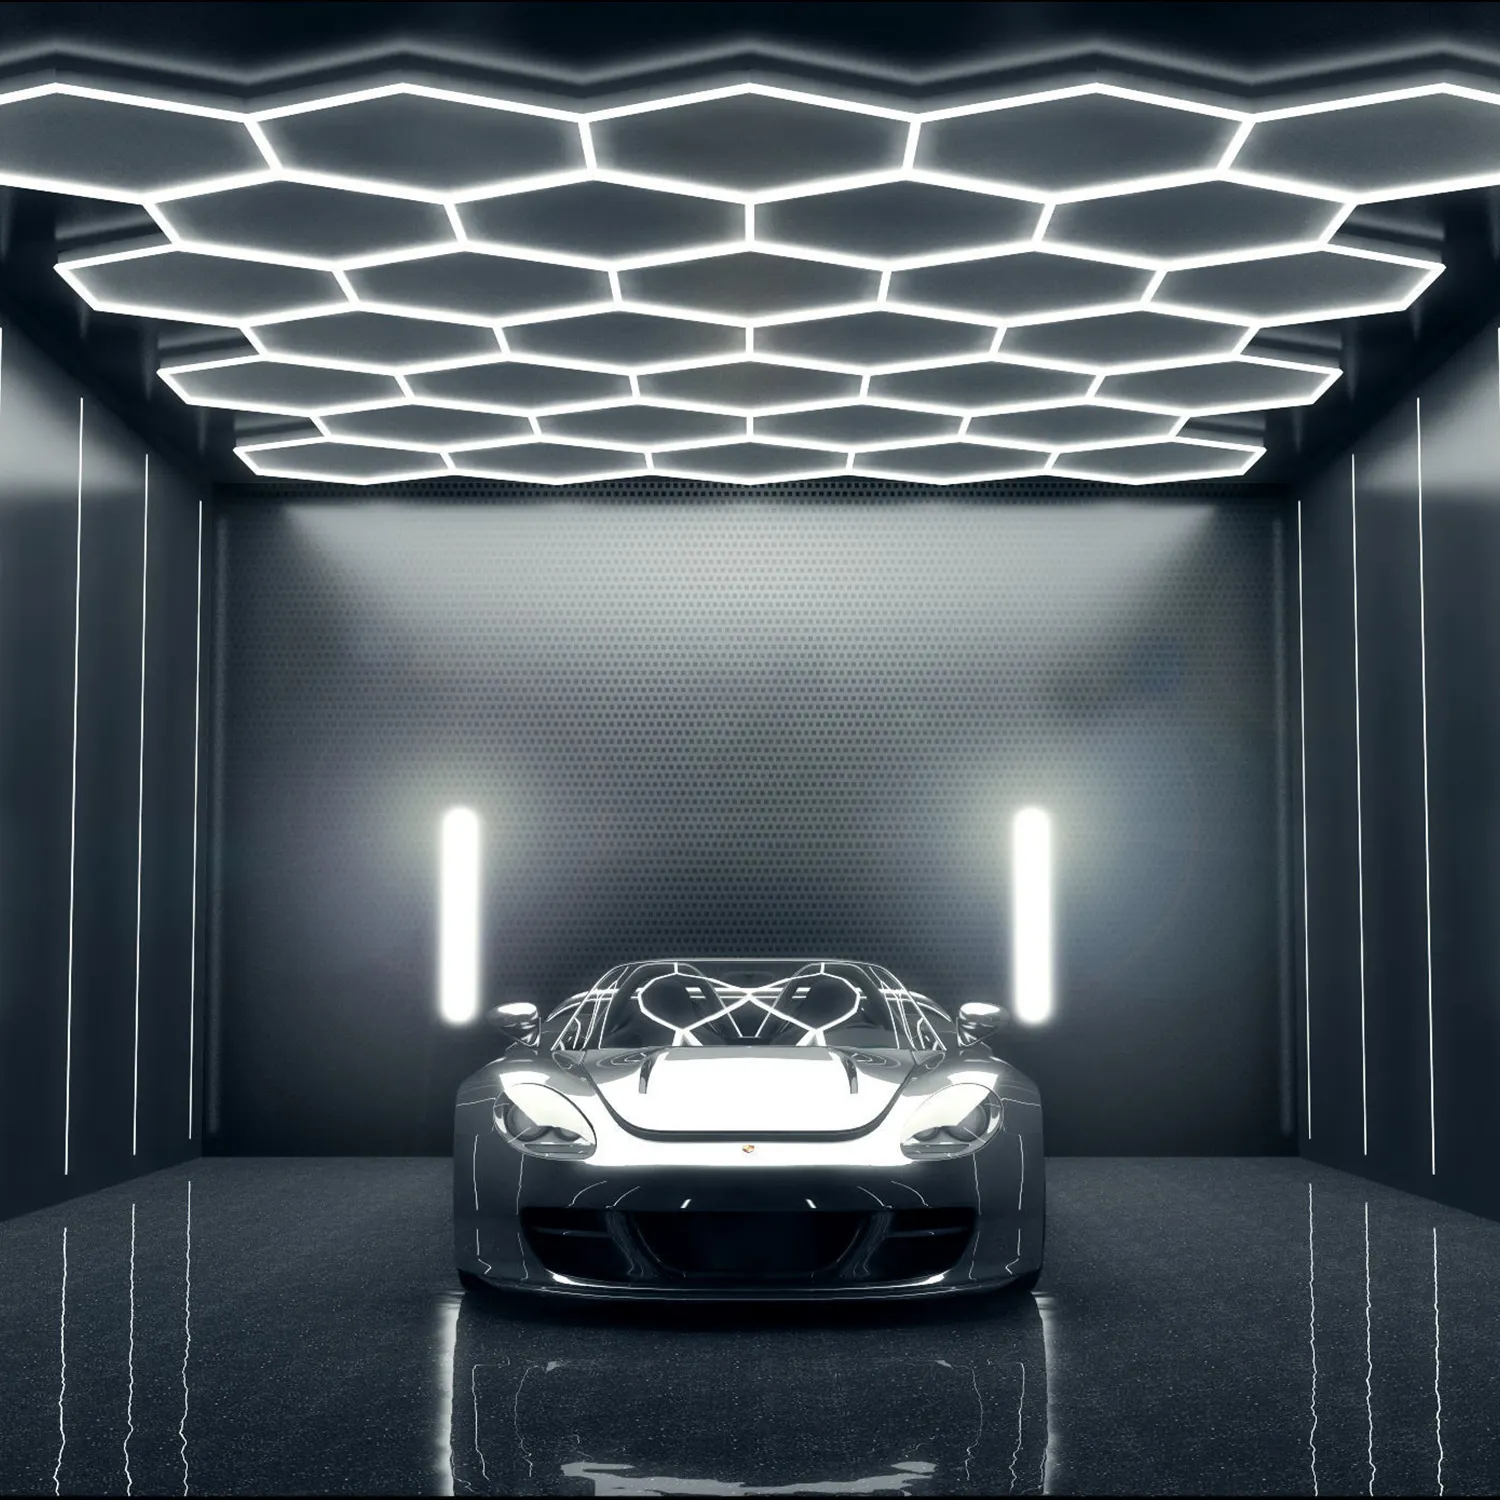 Auto Details Winkel En Garage Gymzaal Modulaire Plafond Garage Zeshoekige Led Licht Kapper